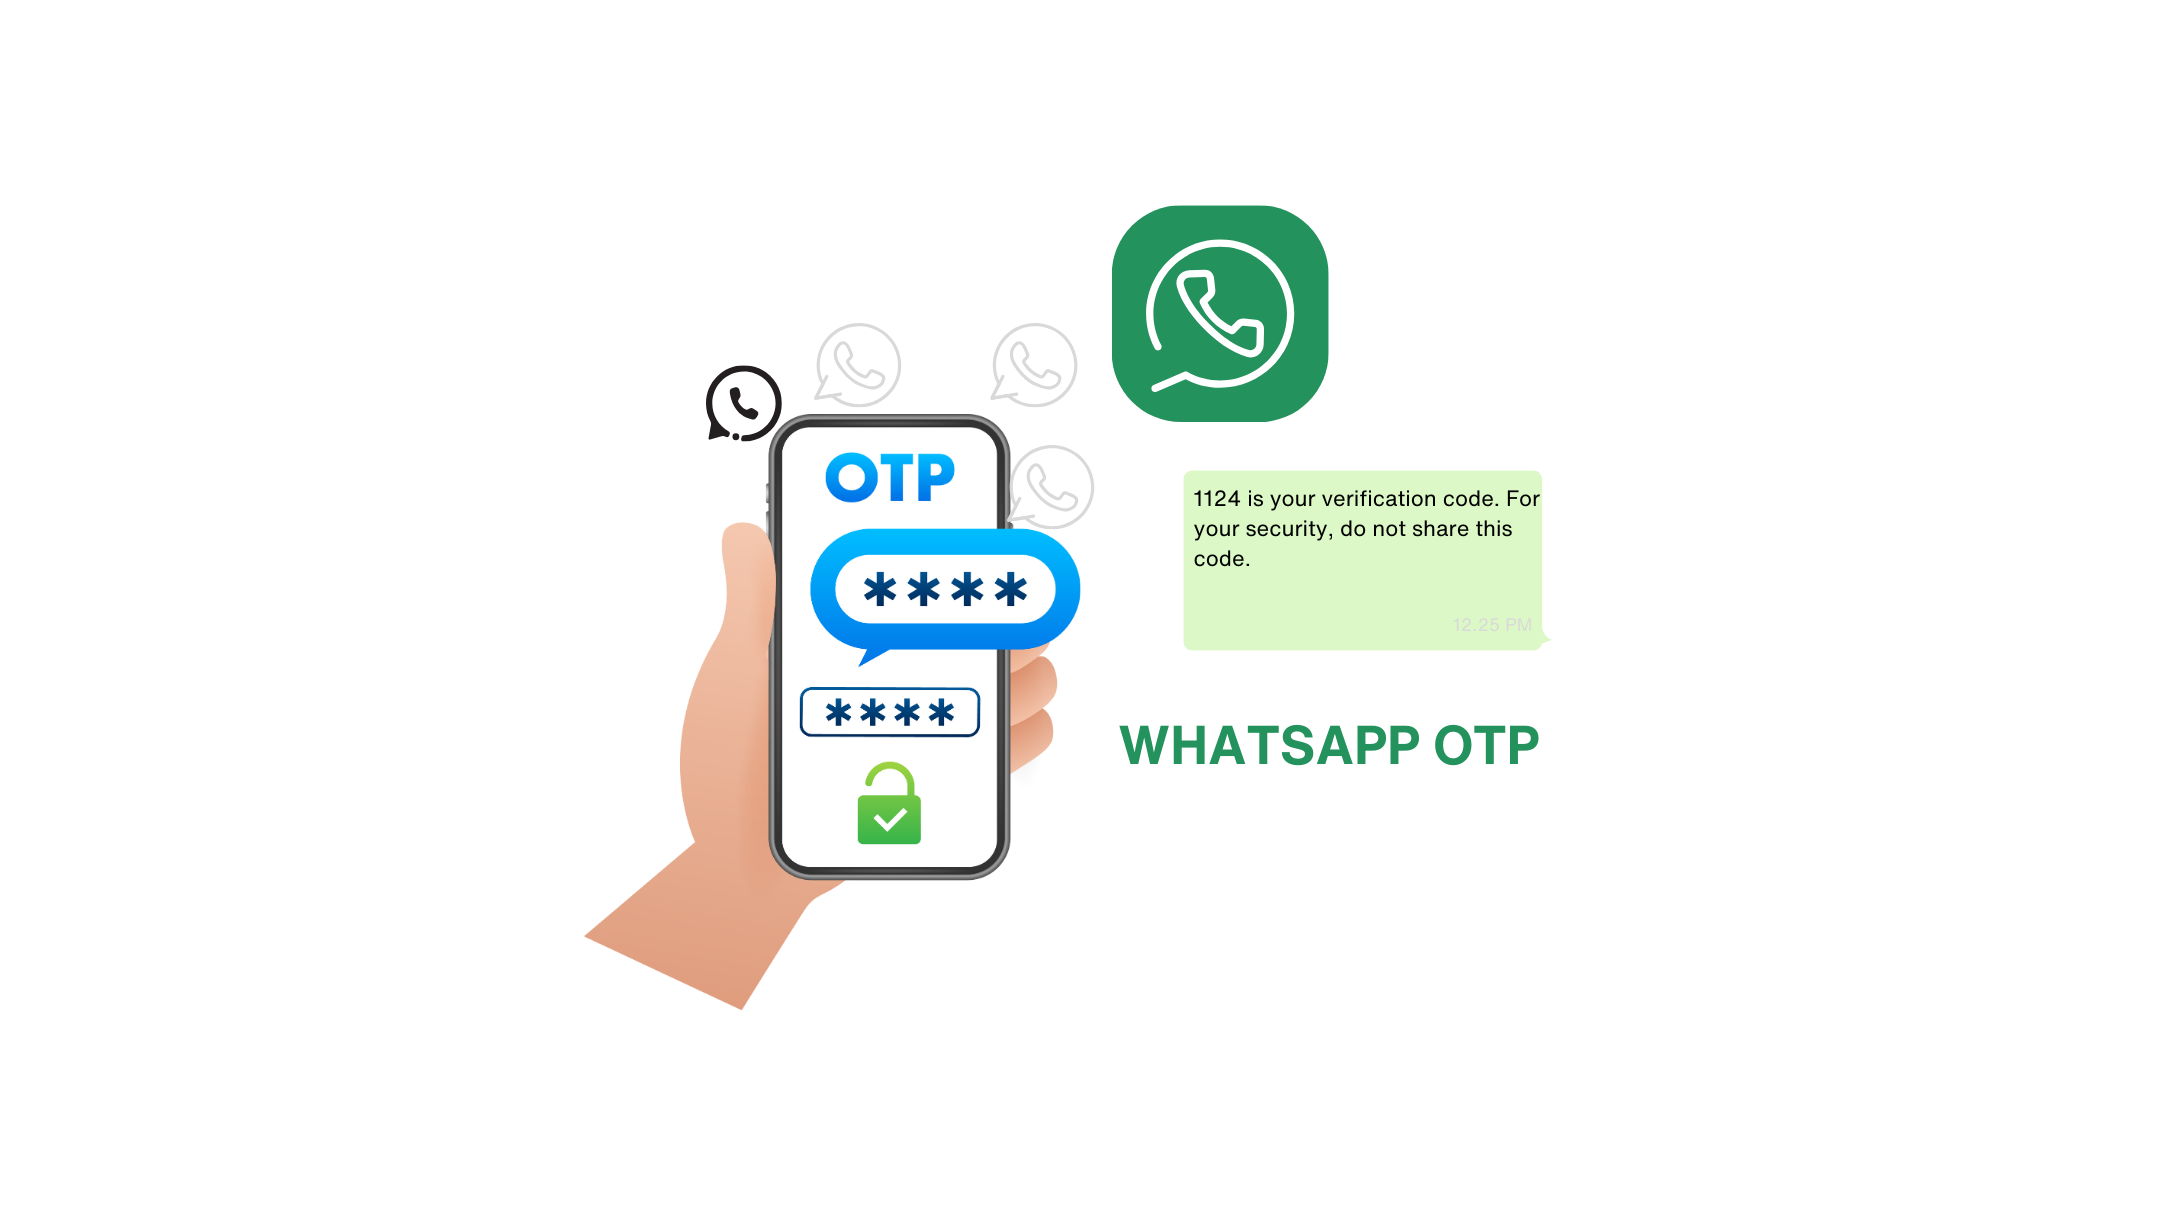 Implementing WhatsApp OTP